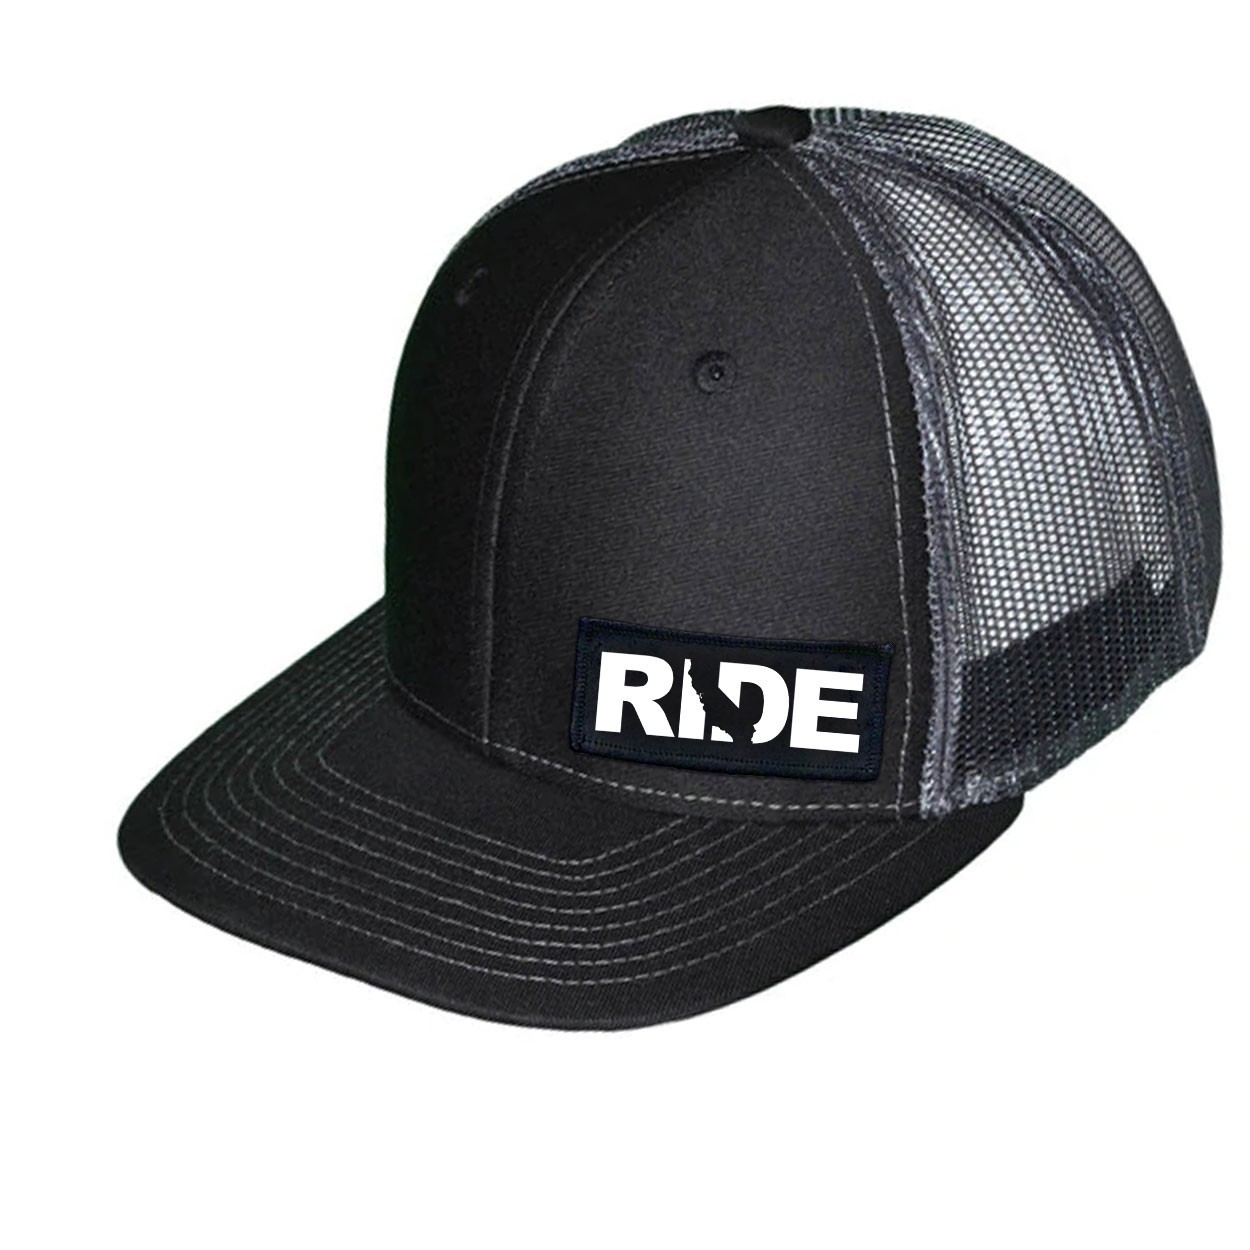 Ride California Night Out Woven Patch Snapback Trucker Hat Black/Dark Gray (White Logo)